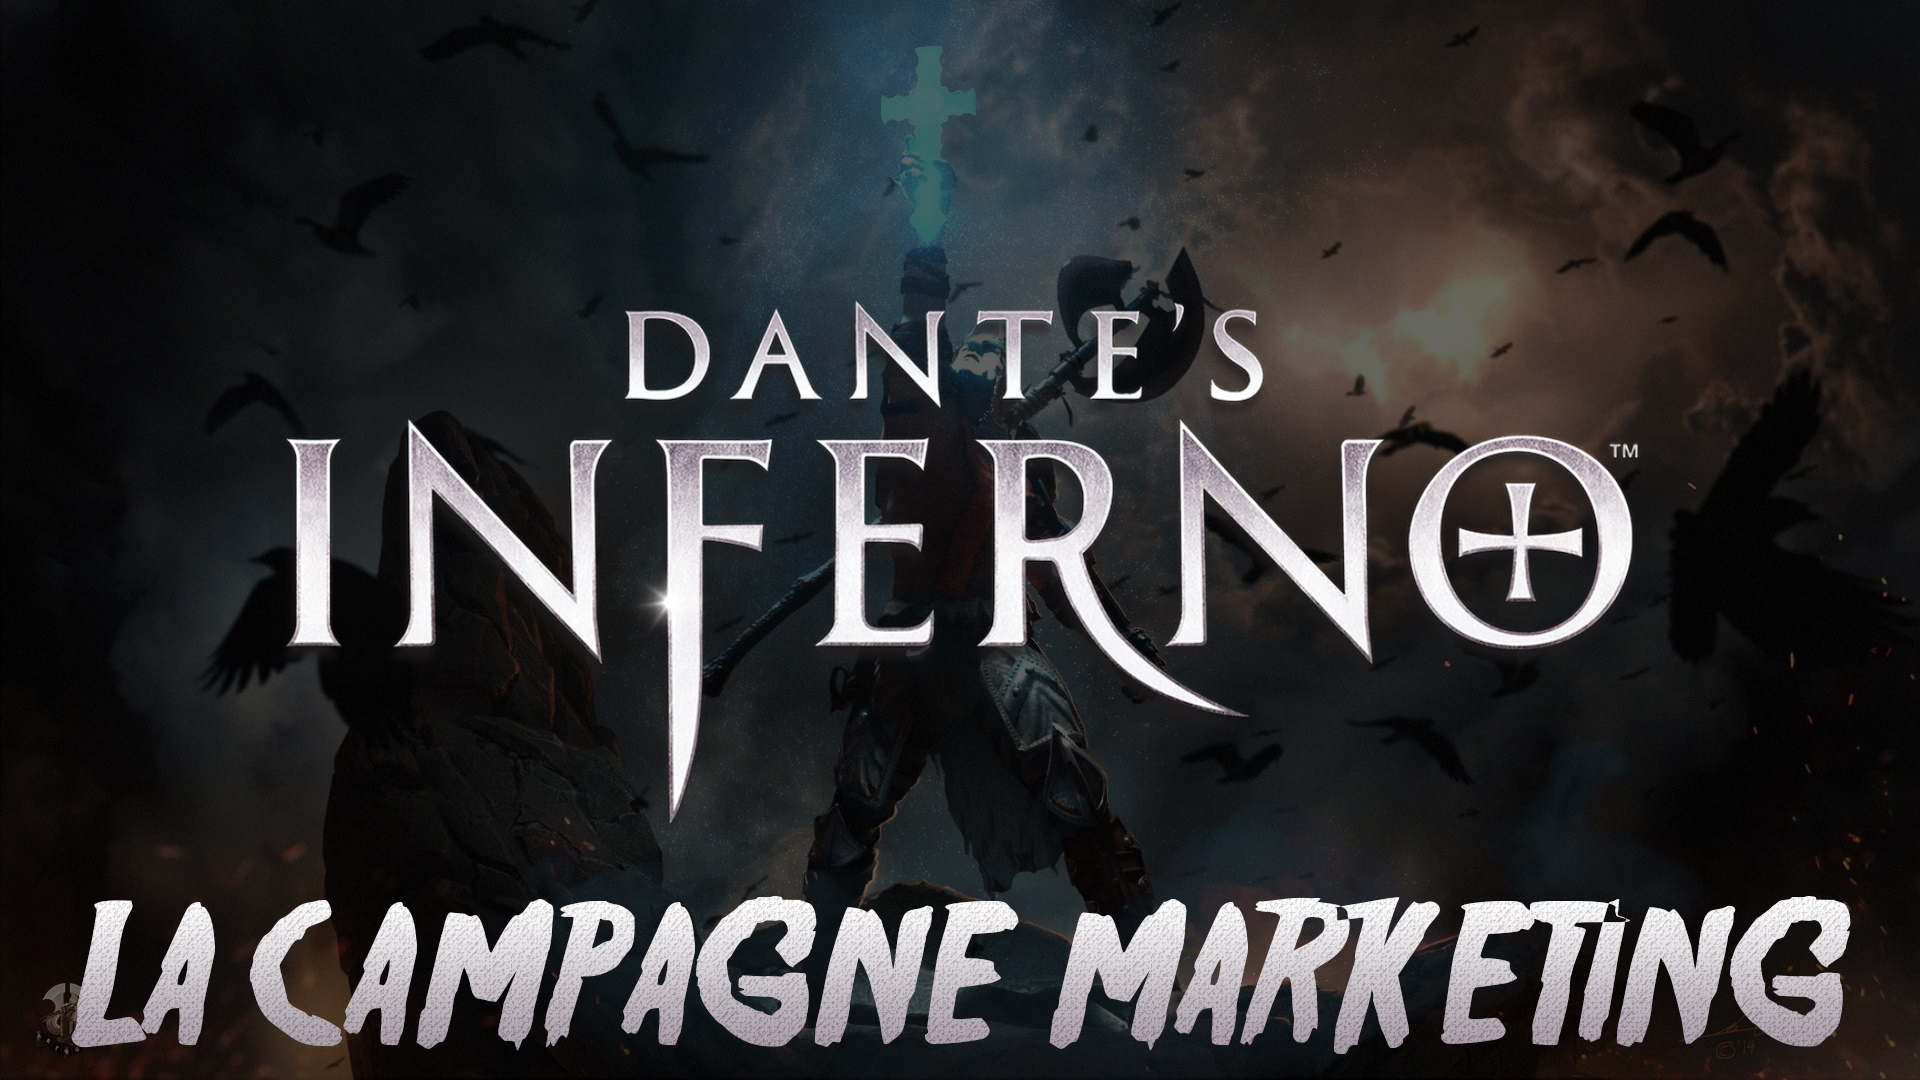 Miniature de la vidéo concernant Dante's inferno et sa campagne marketing